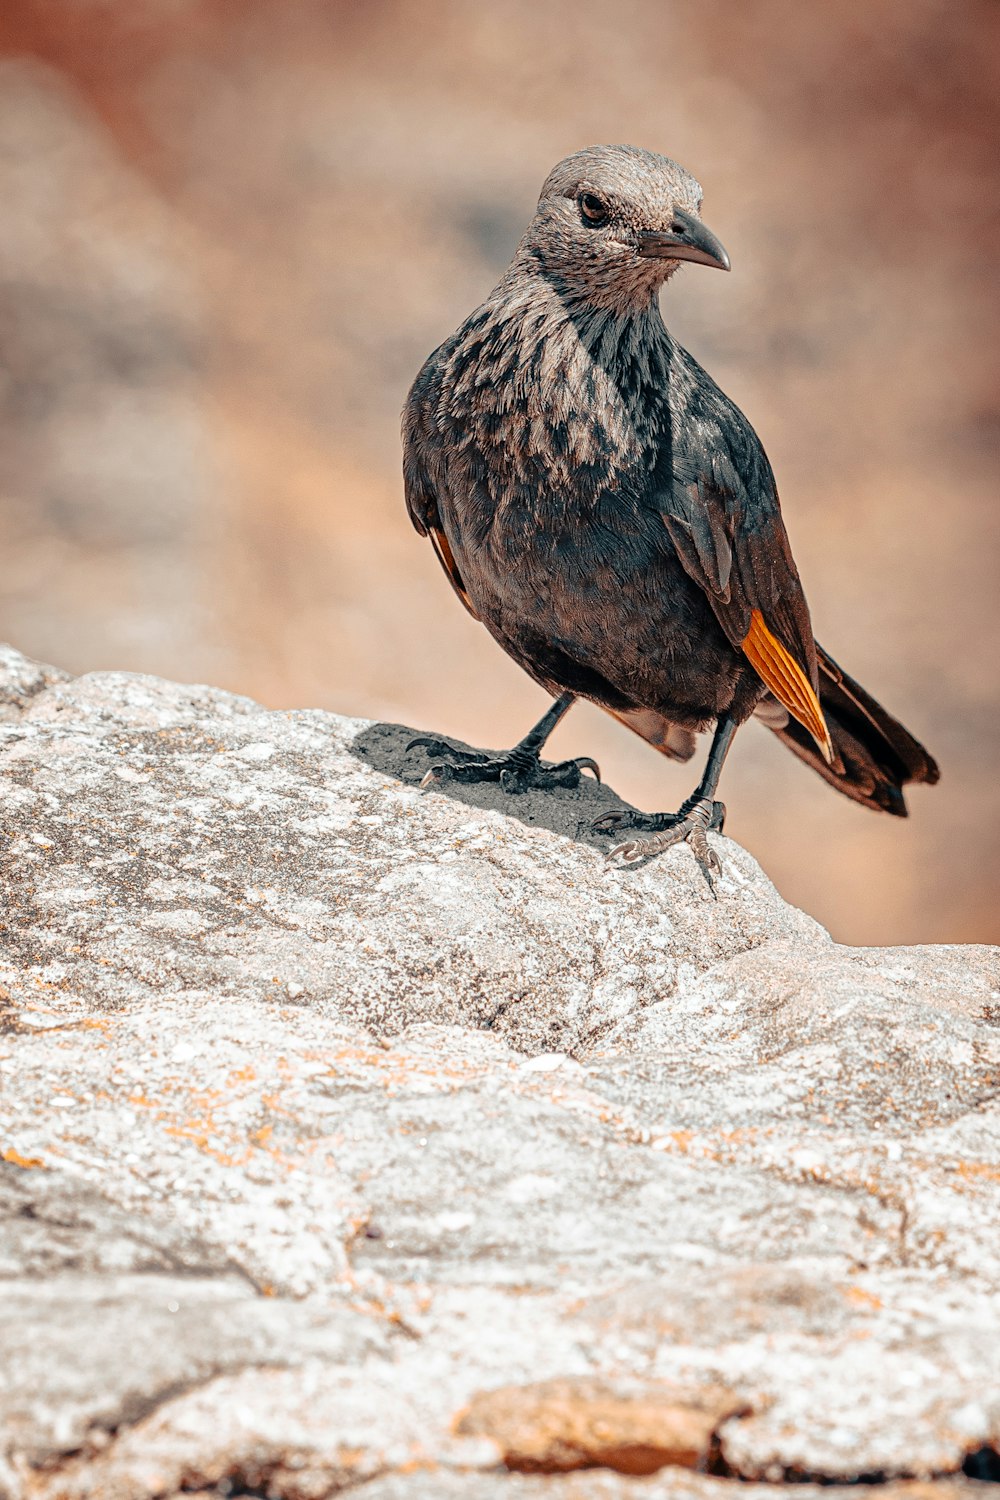 a bird standing on top of a rock